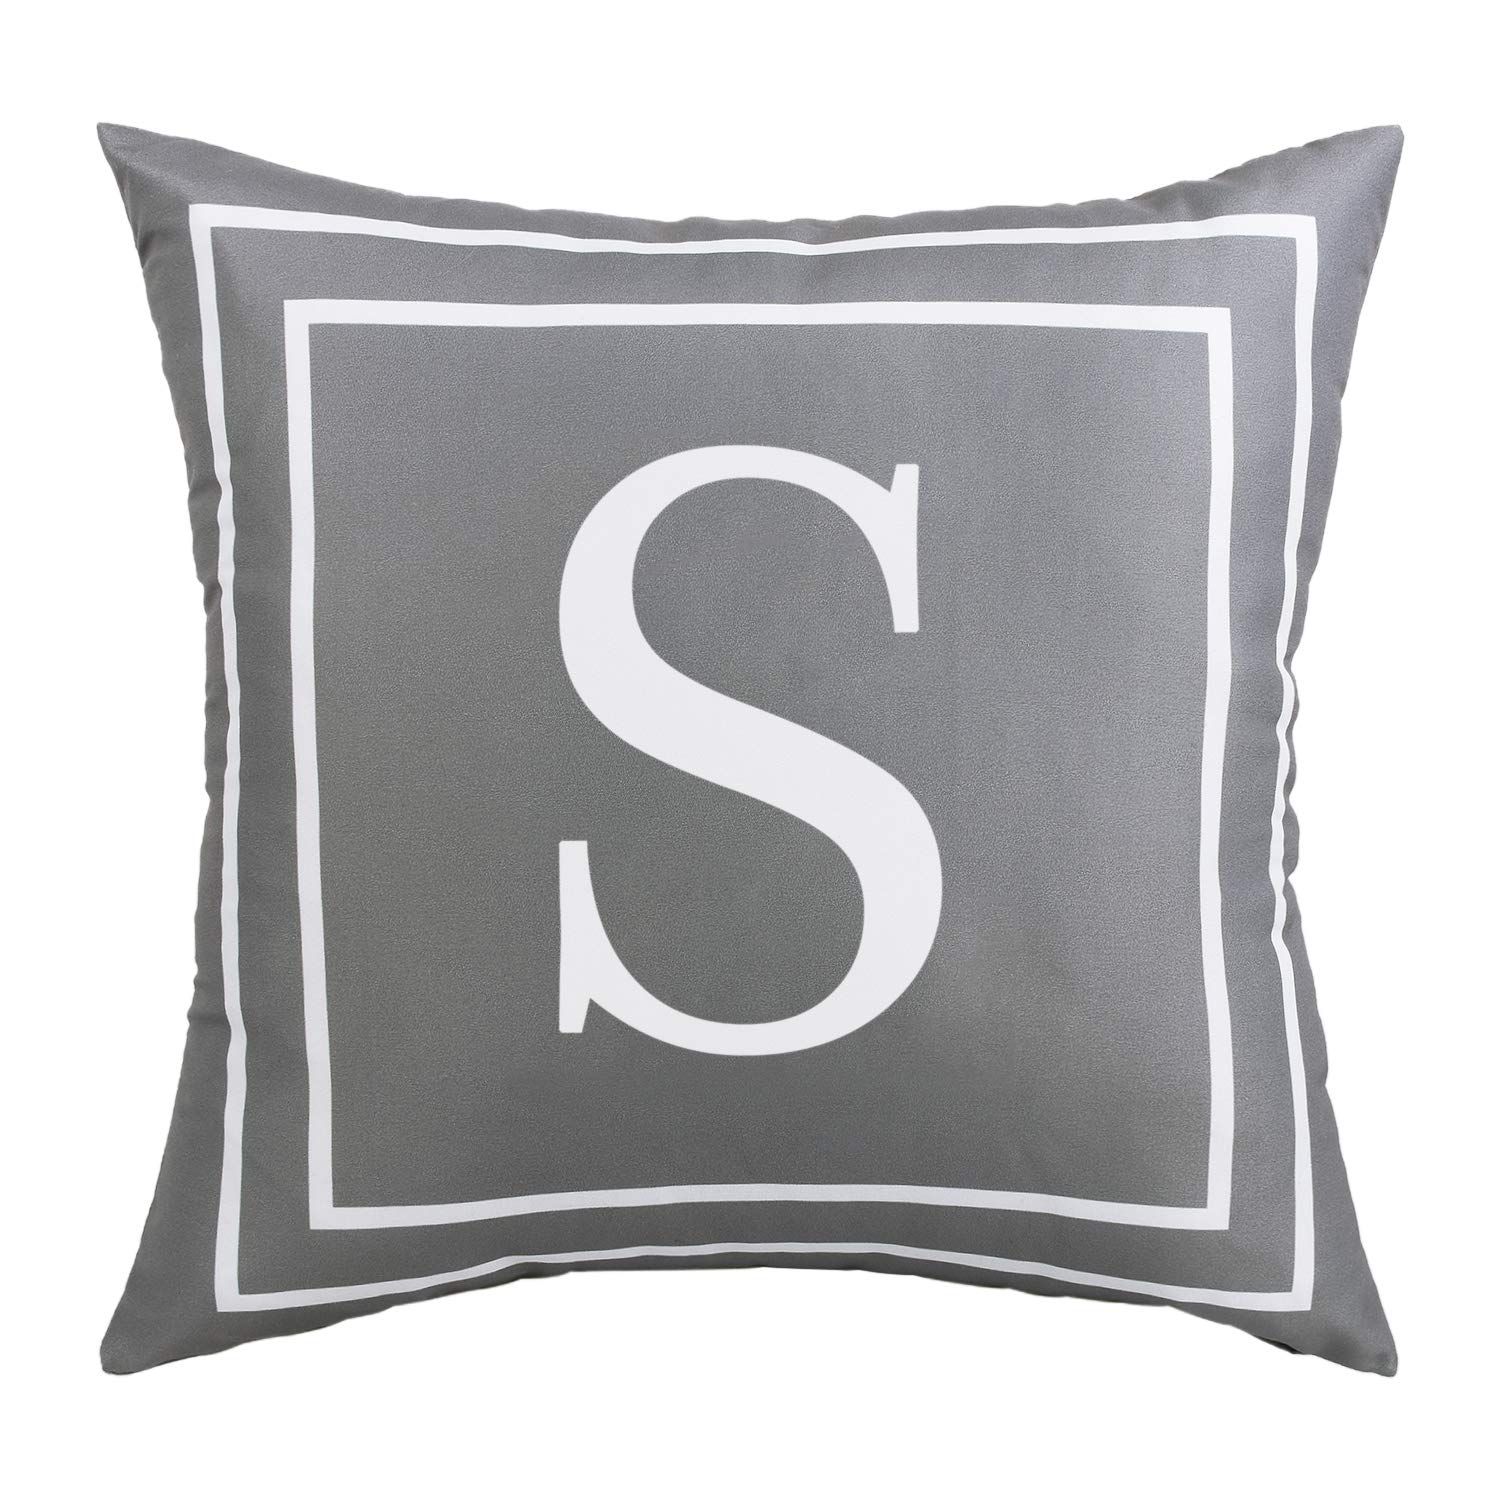 Fascidorm Gray Pillow Cover English Alphabet S Throw Pillow Case Modern Cushion Cover Square Pillowc | Amazon (US)